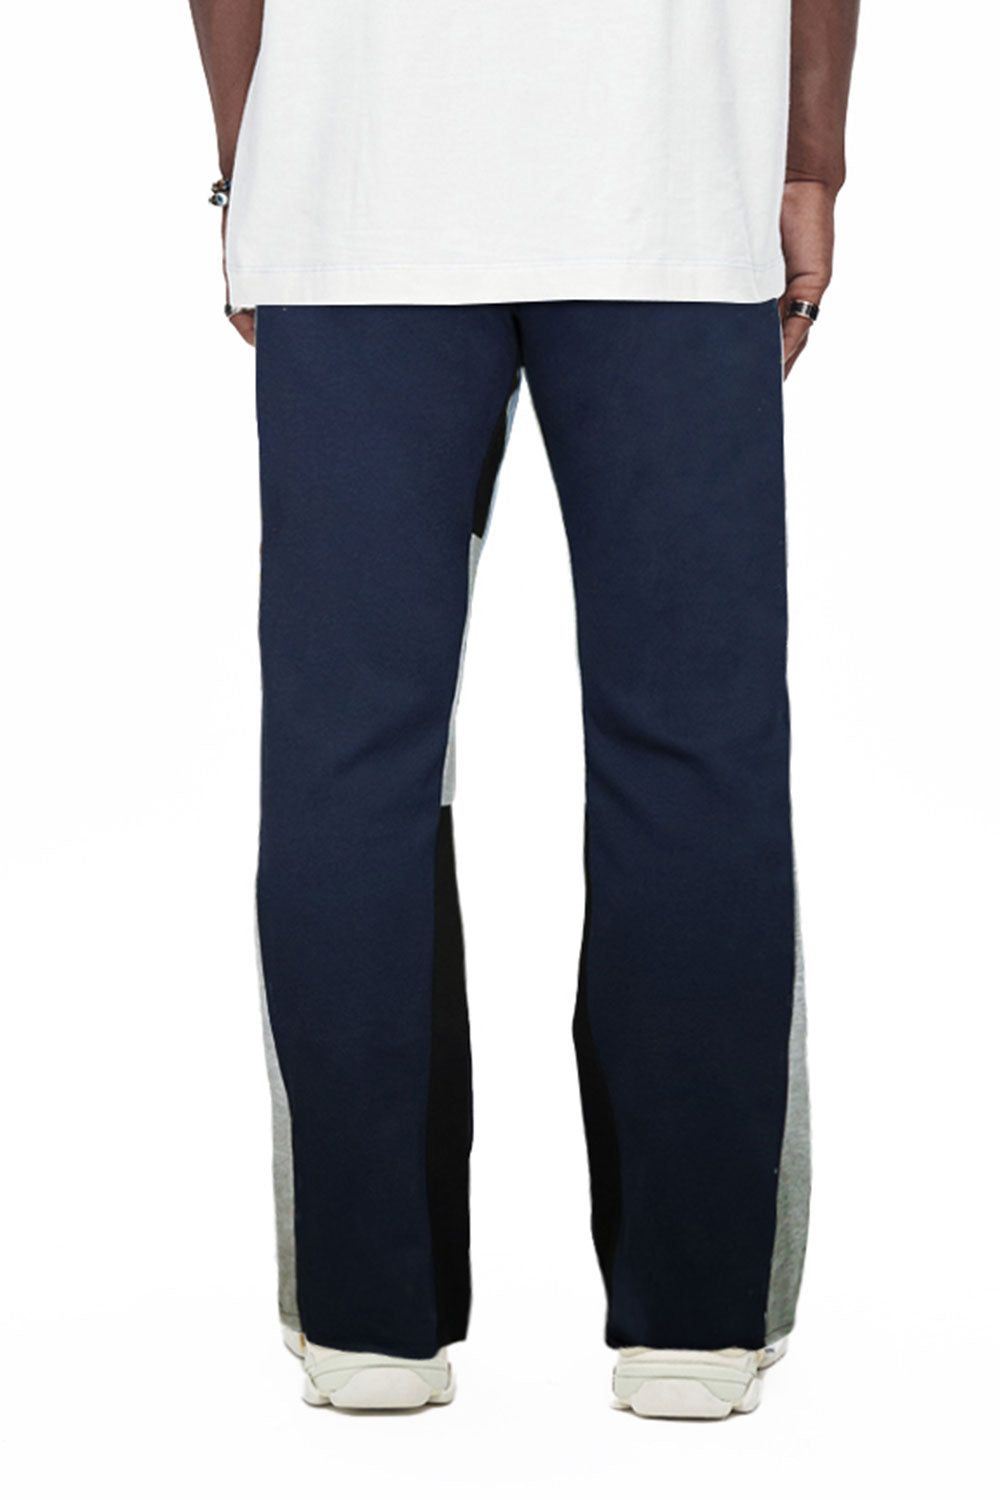 Gingtto Men's Bell-Bottom Pants Casual Comfortable Flare Pants